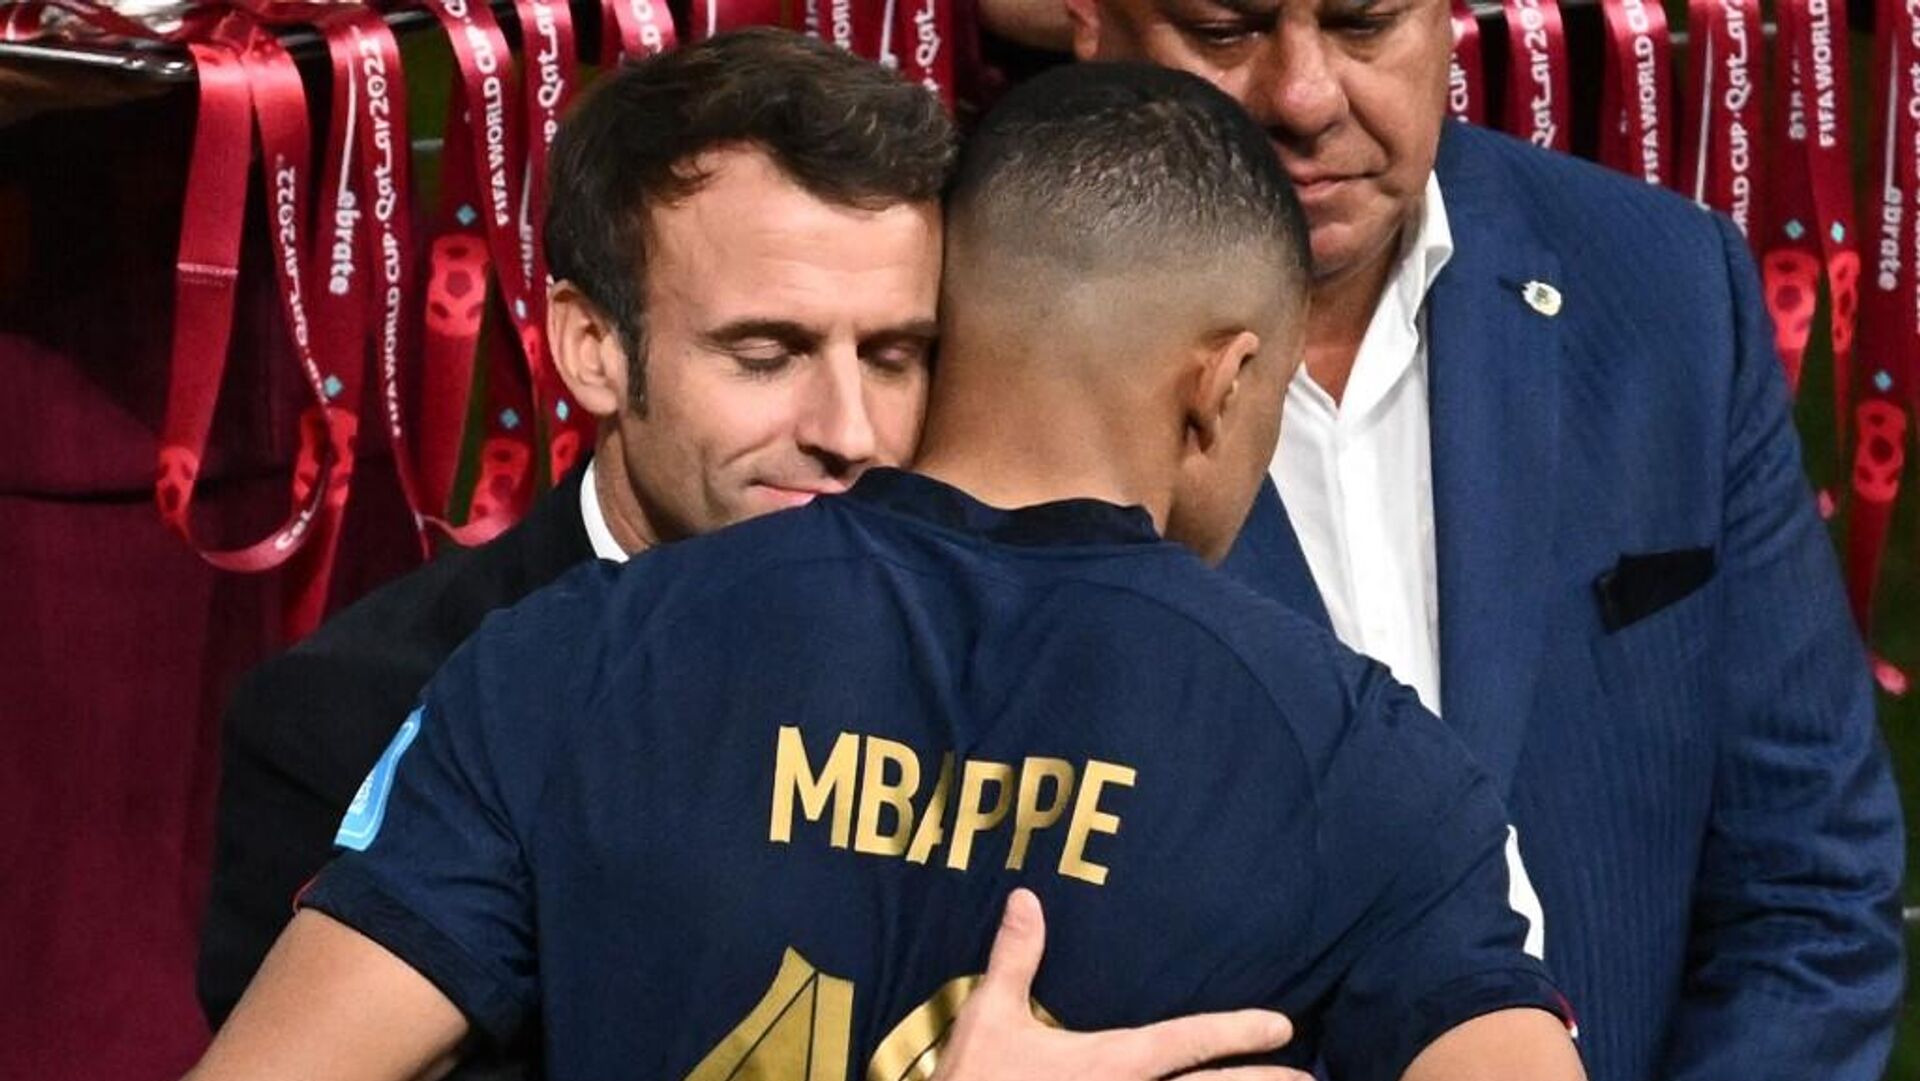 El presidente de Francia, Emmanuel Macron, abraza a Kylian Mbappé después de la final del Mundial de Catar 2022 - Sputnik Mundo, 1920, 19.12.2022